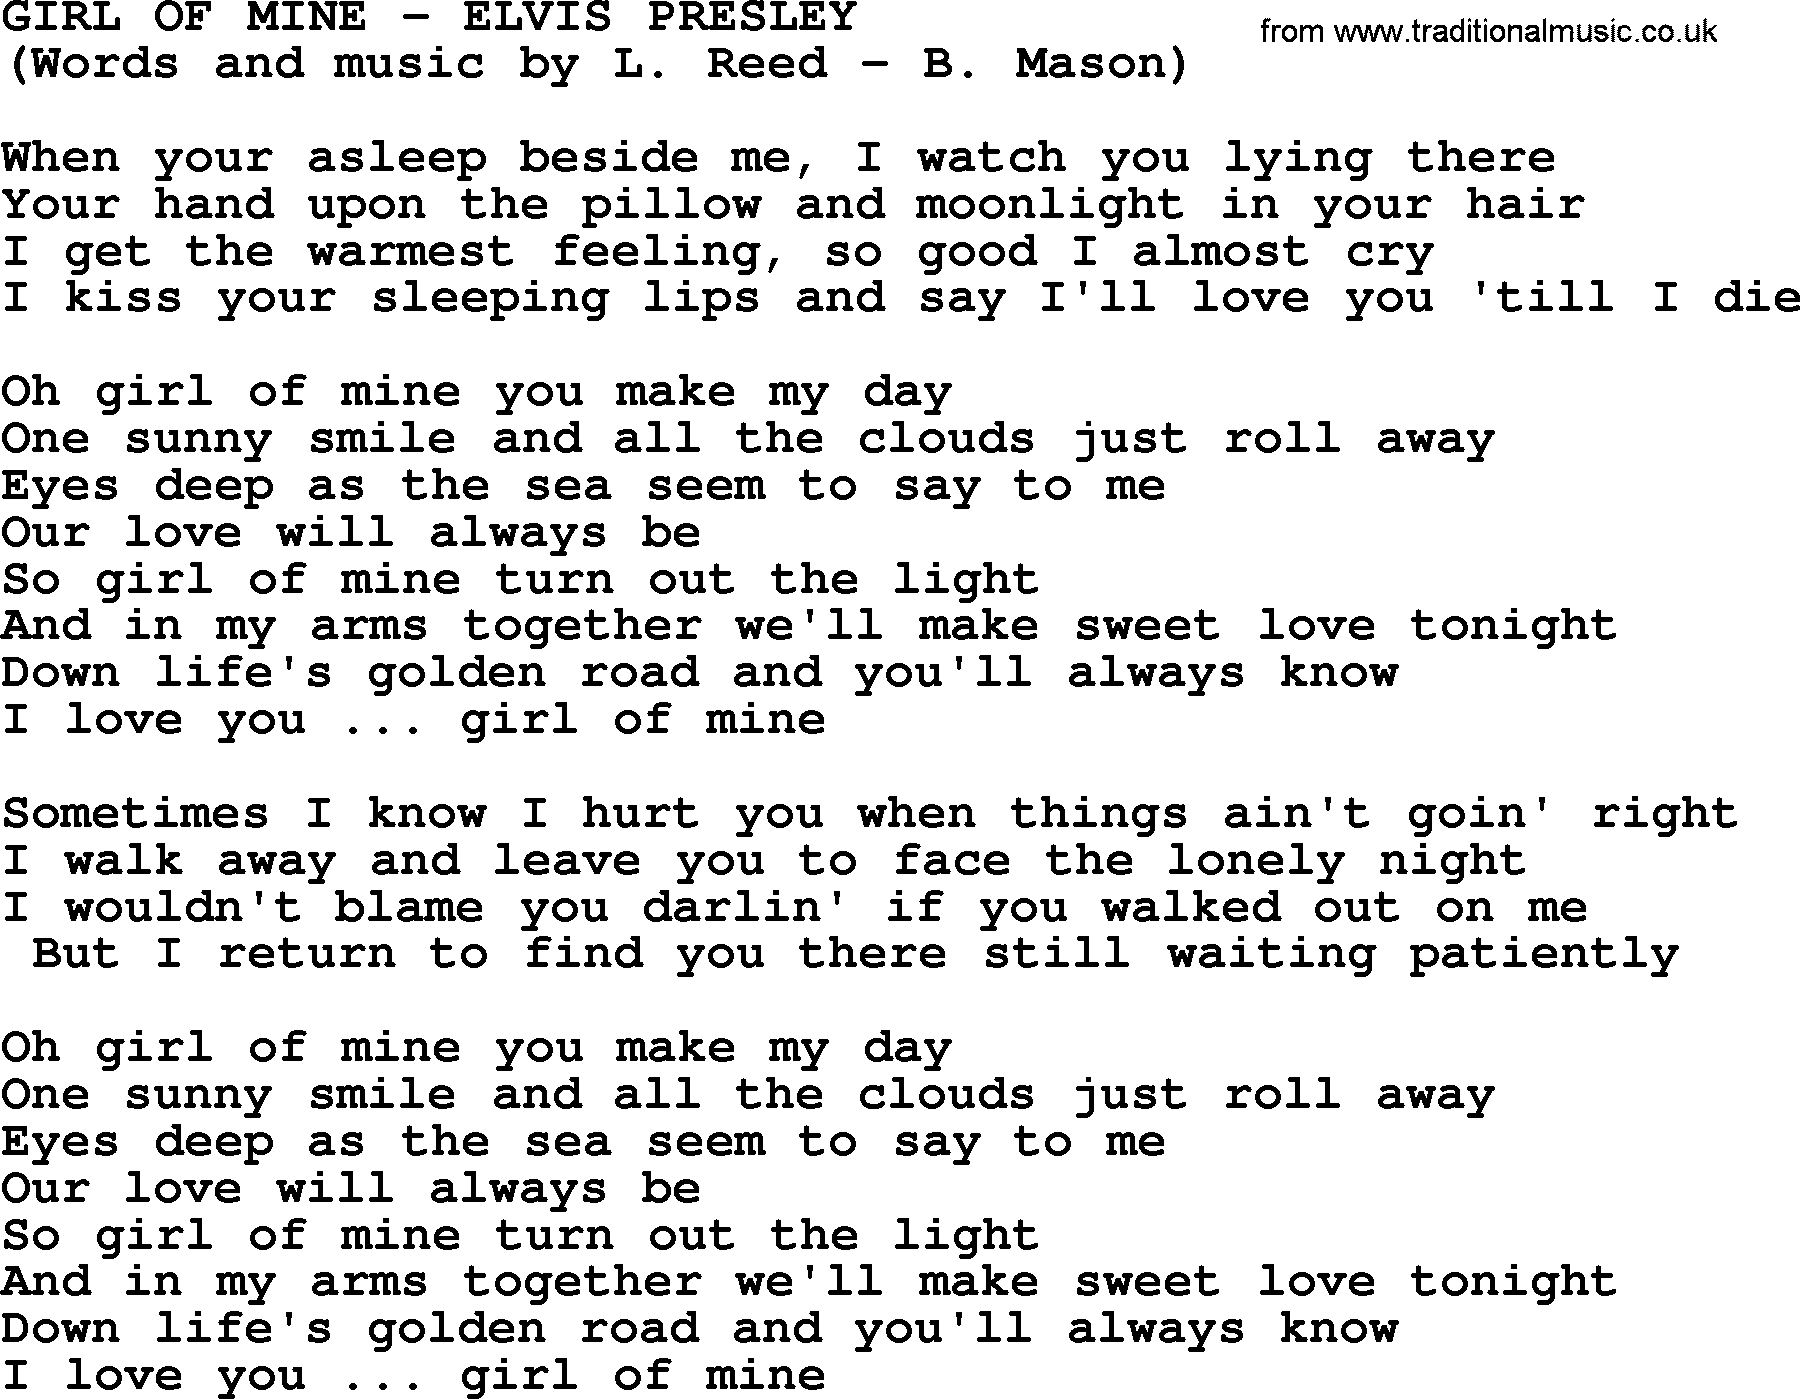 Elvis Presley song: Girl Of Mine lyrics